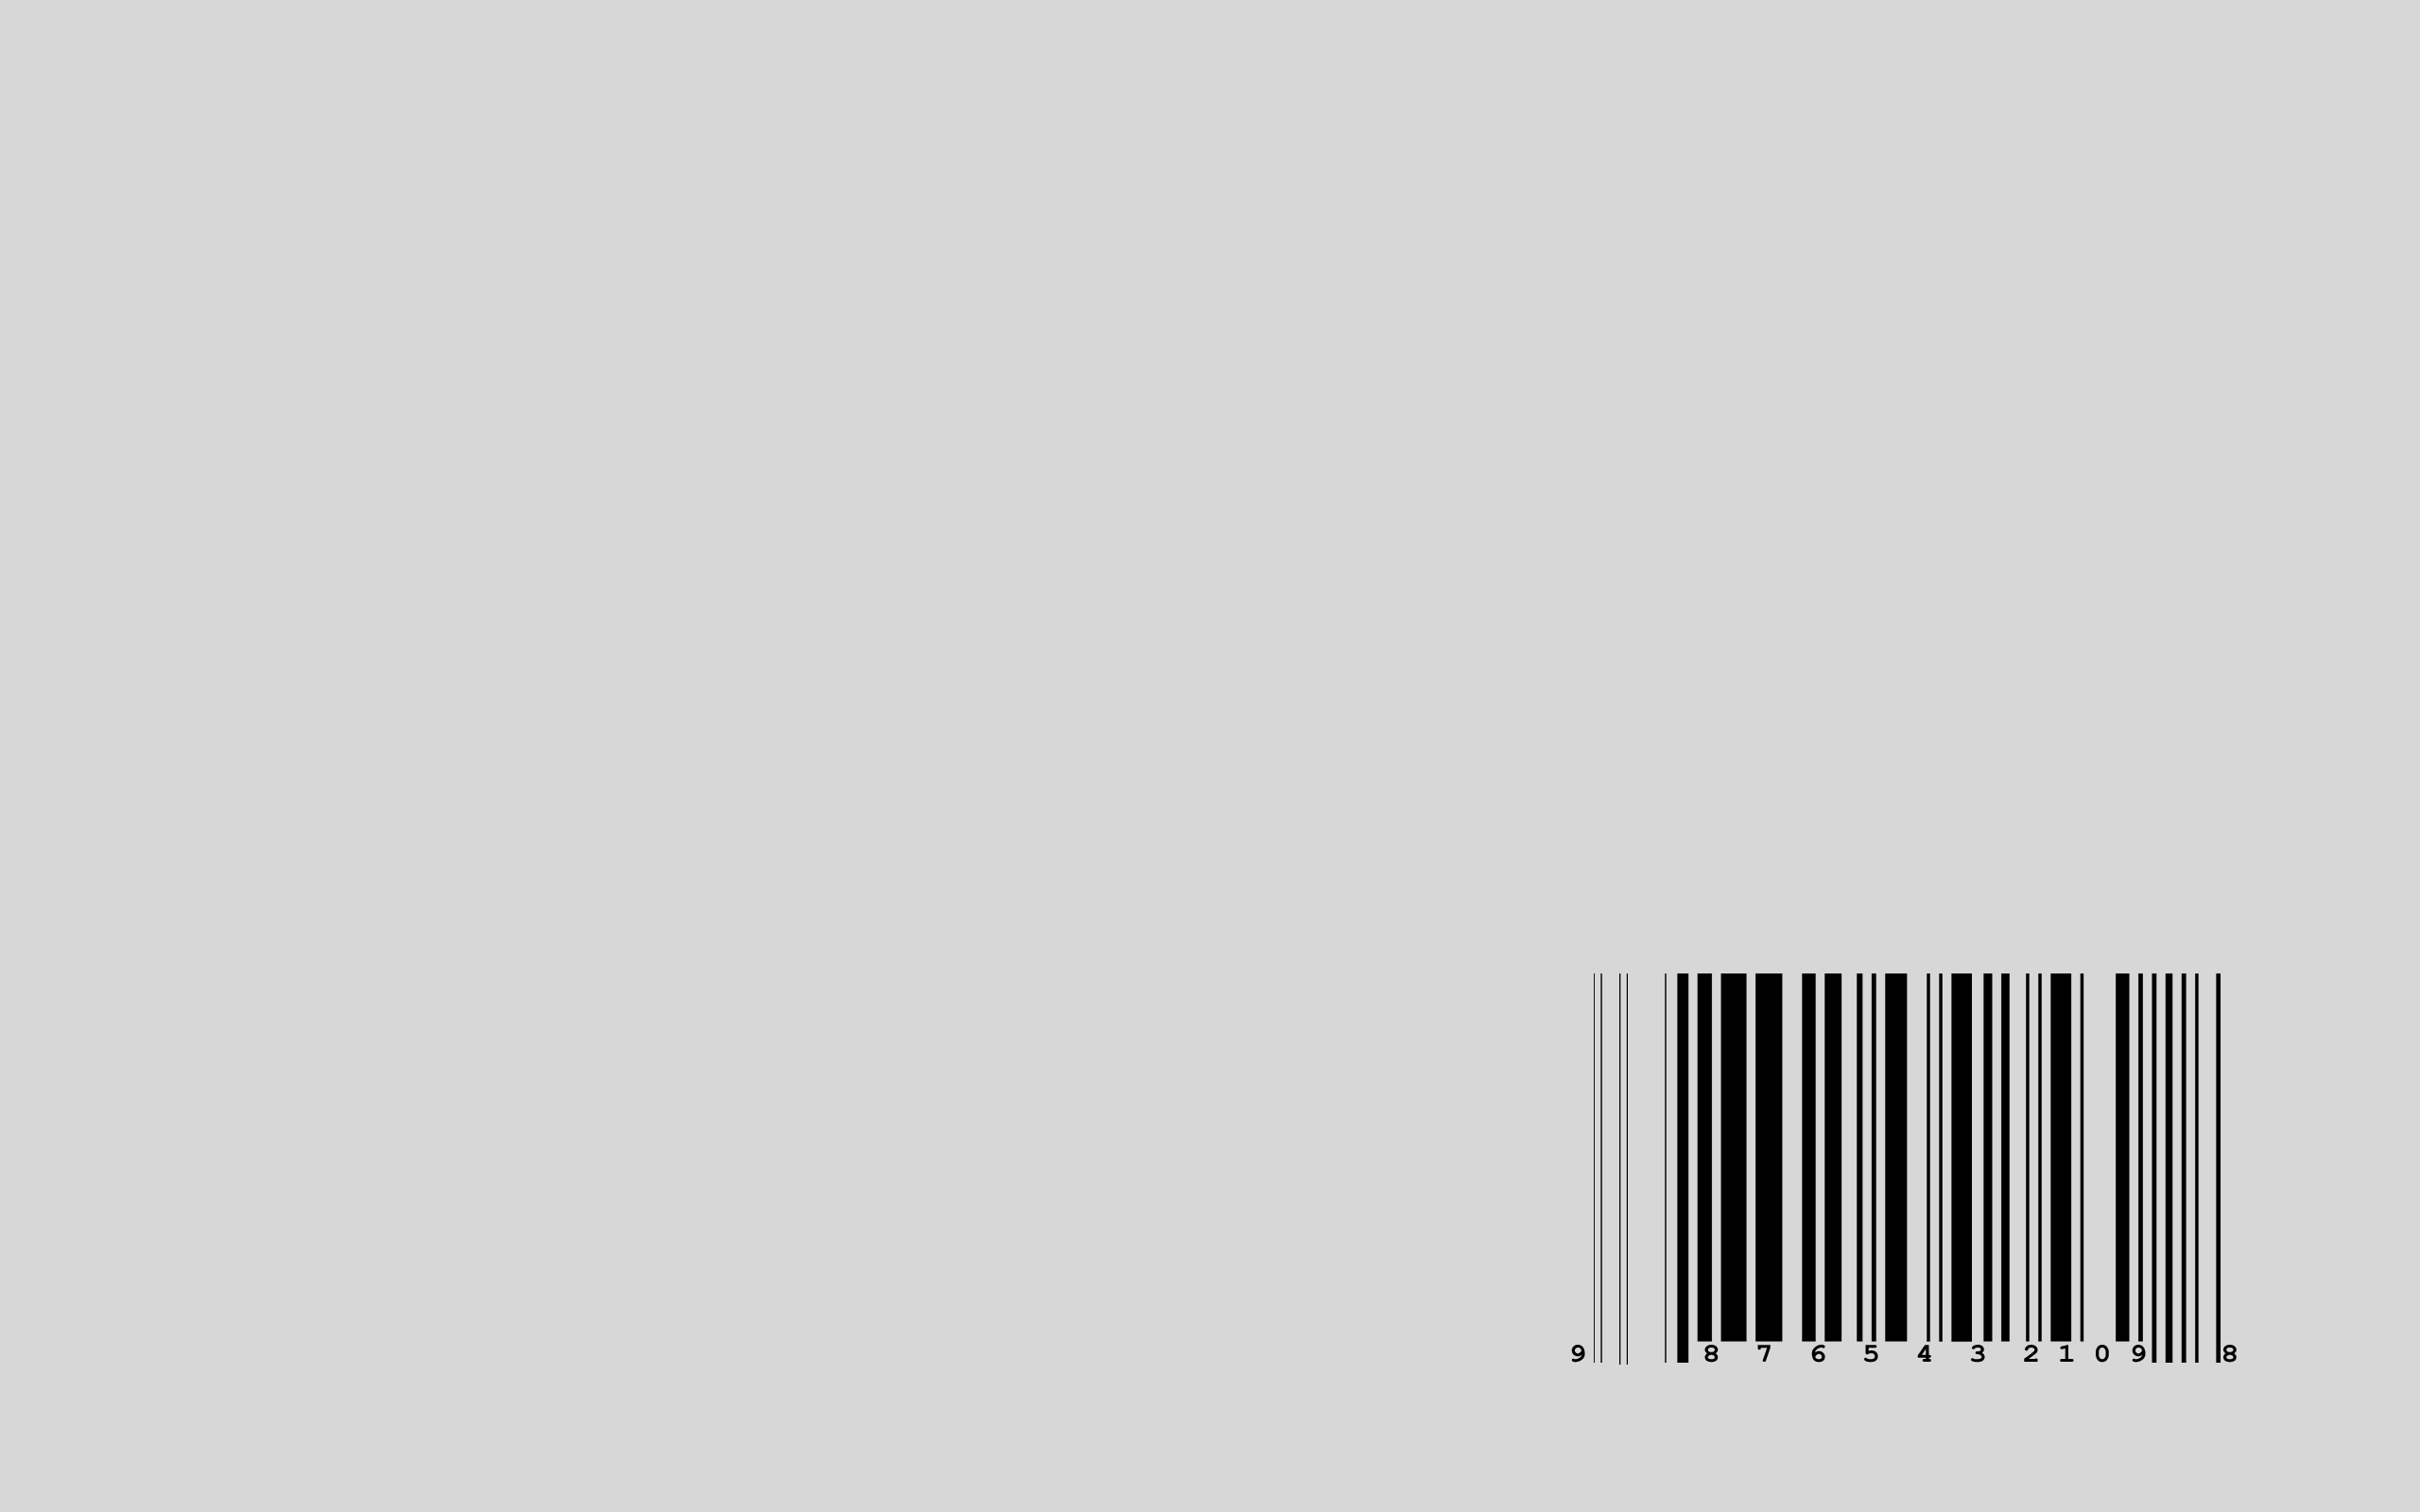 A barcode on a grey background - Minimalist